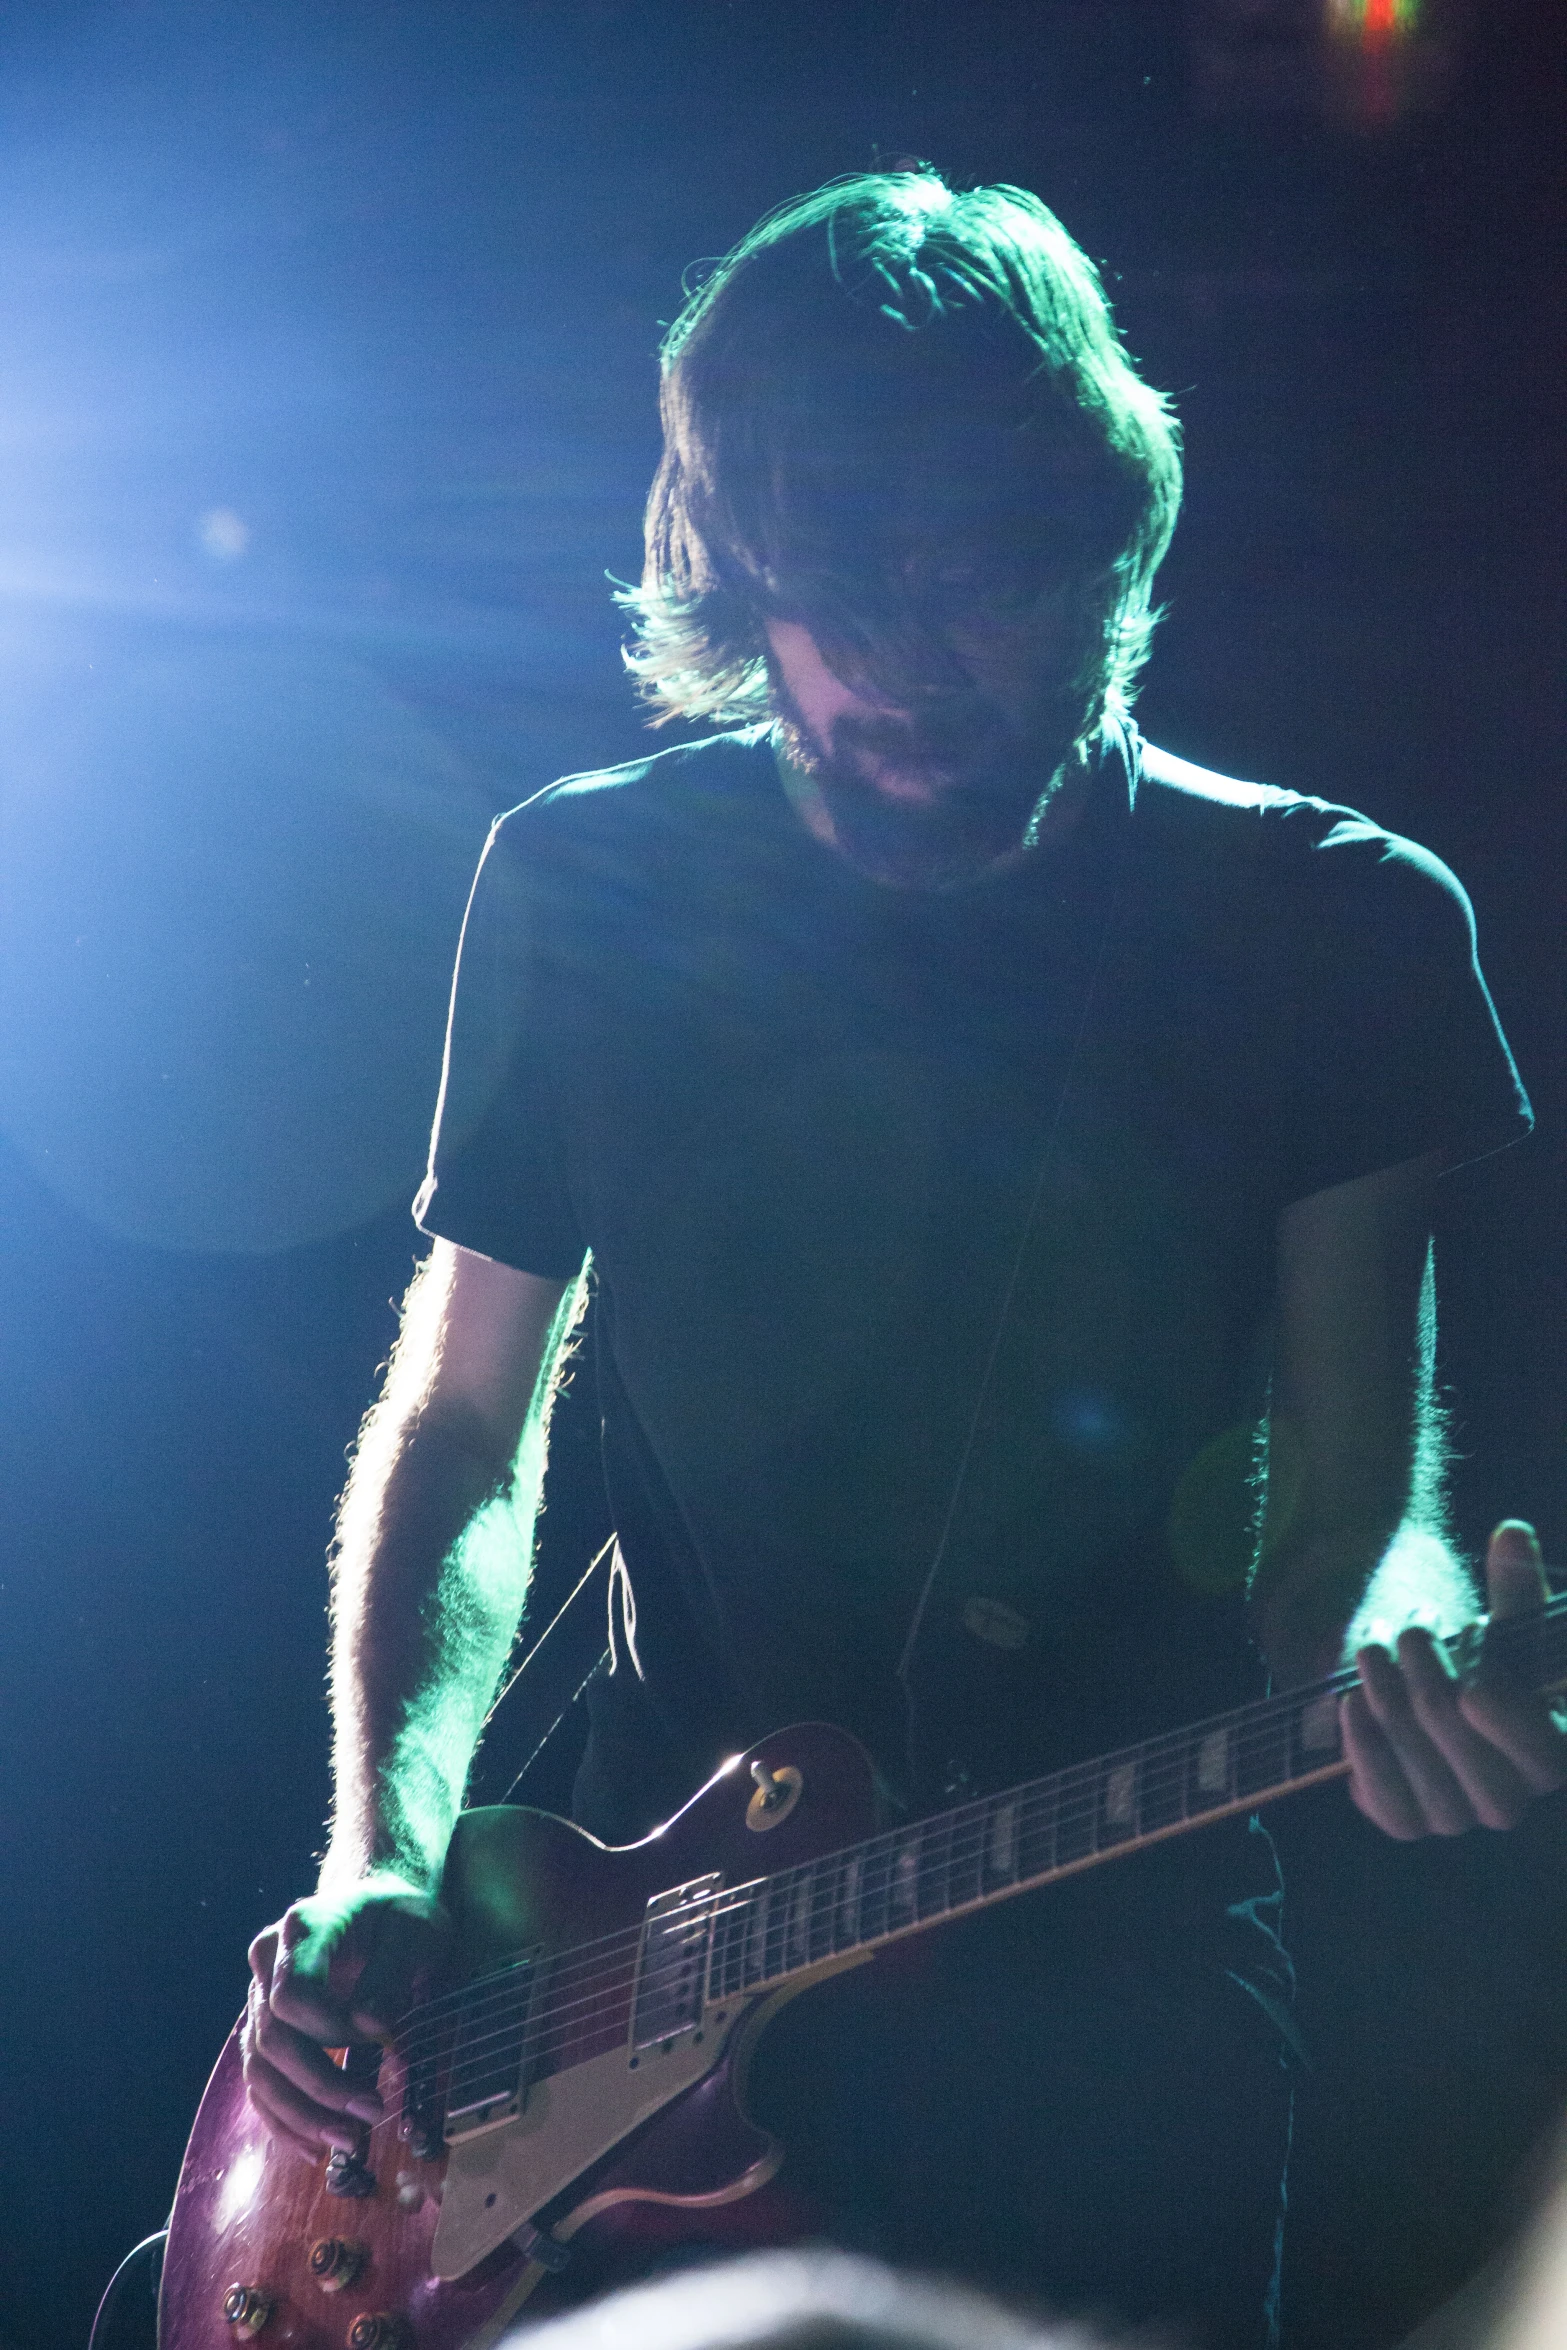 a man plays an electric guitar in a dark room